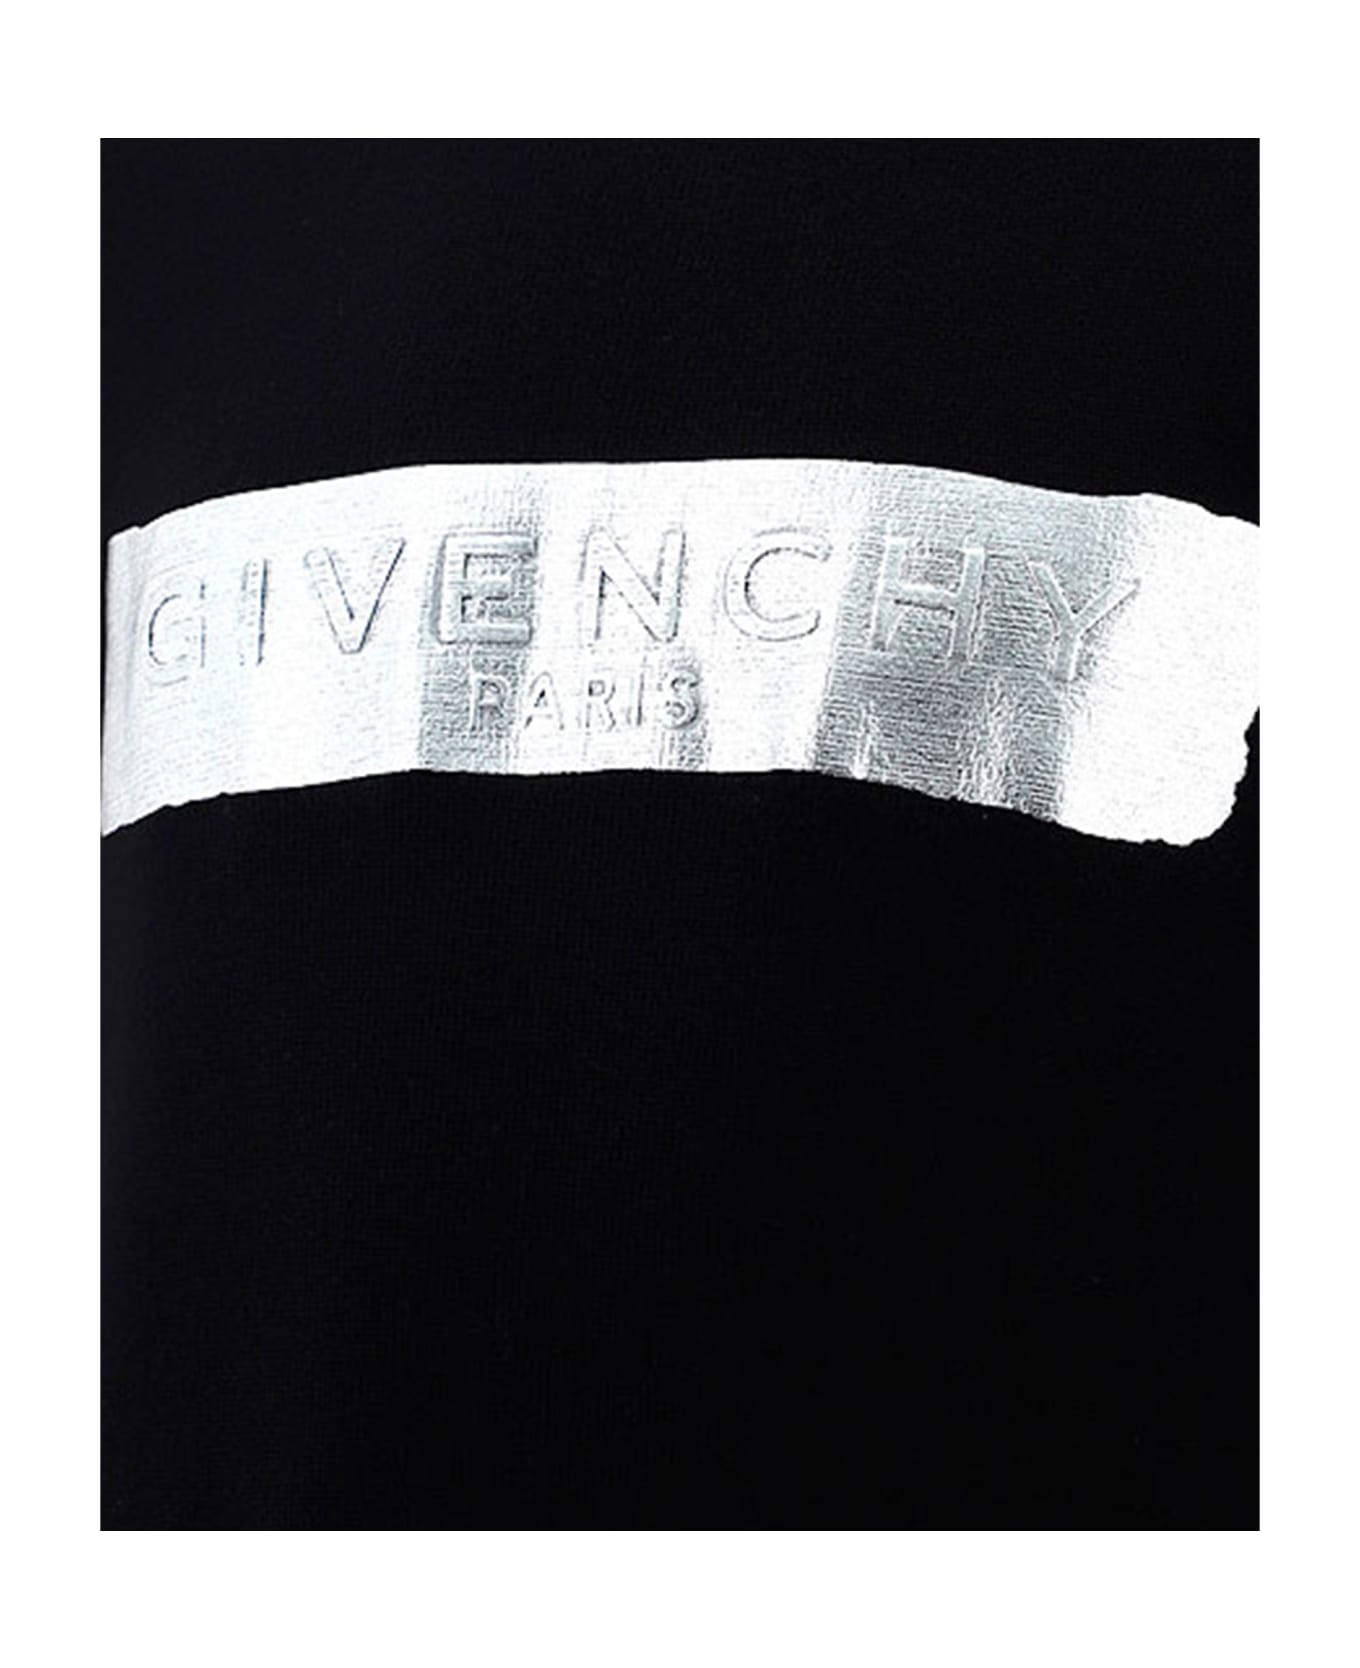 Givenchy Logo Sweater - Black